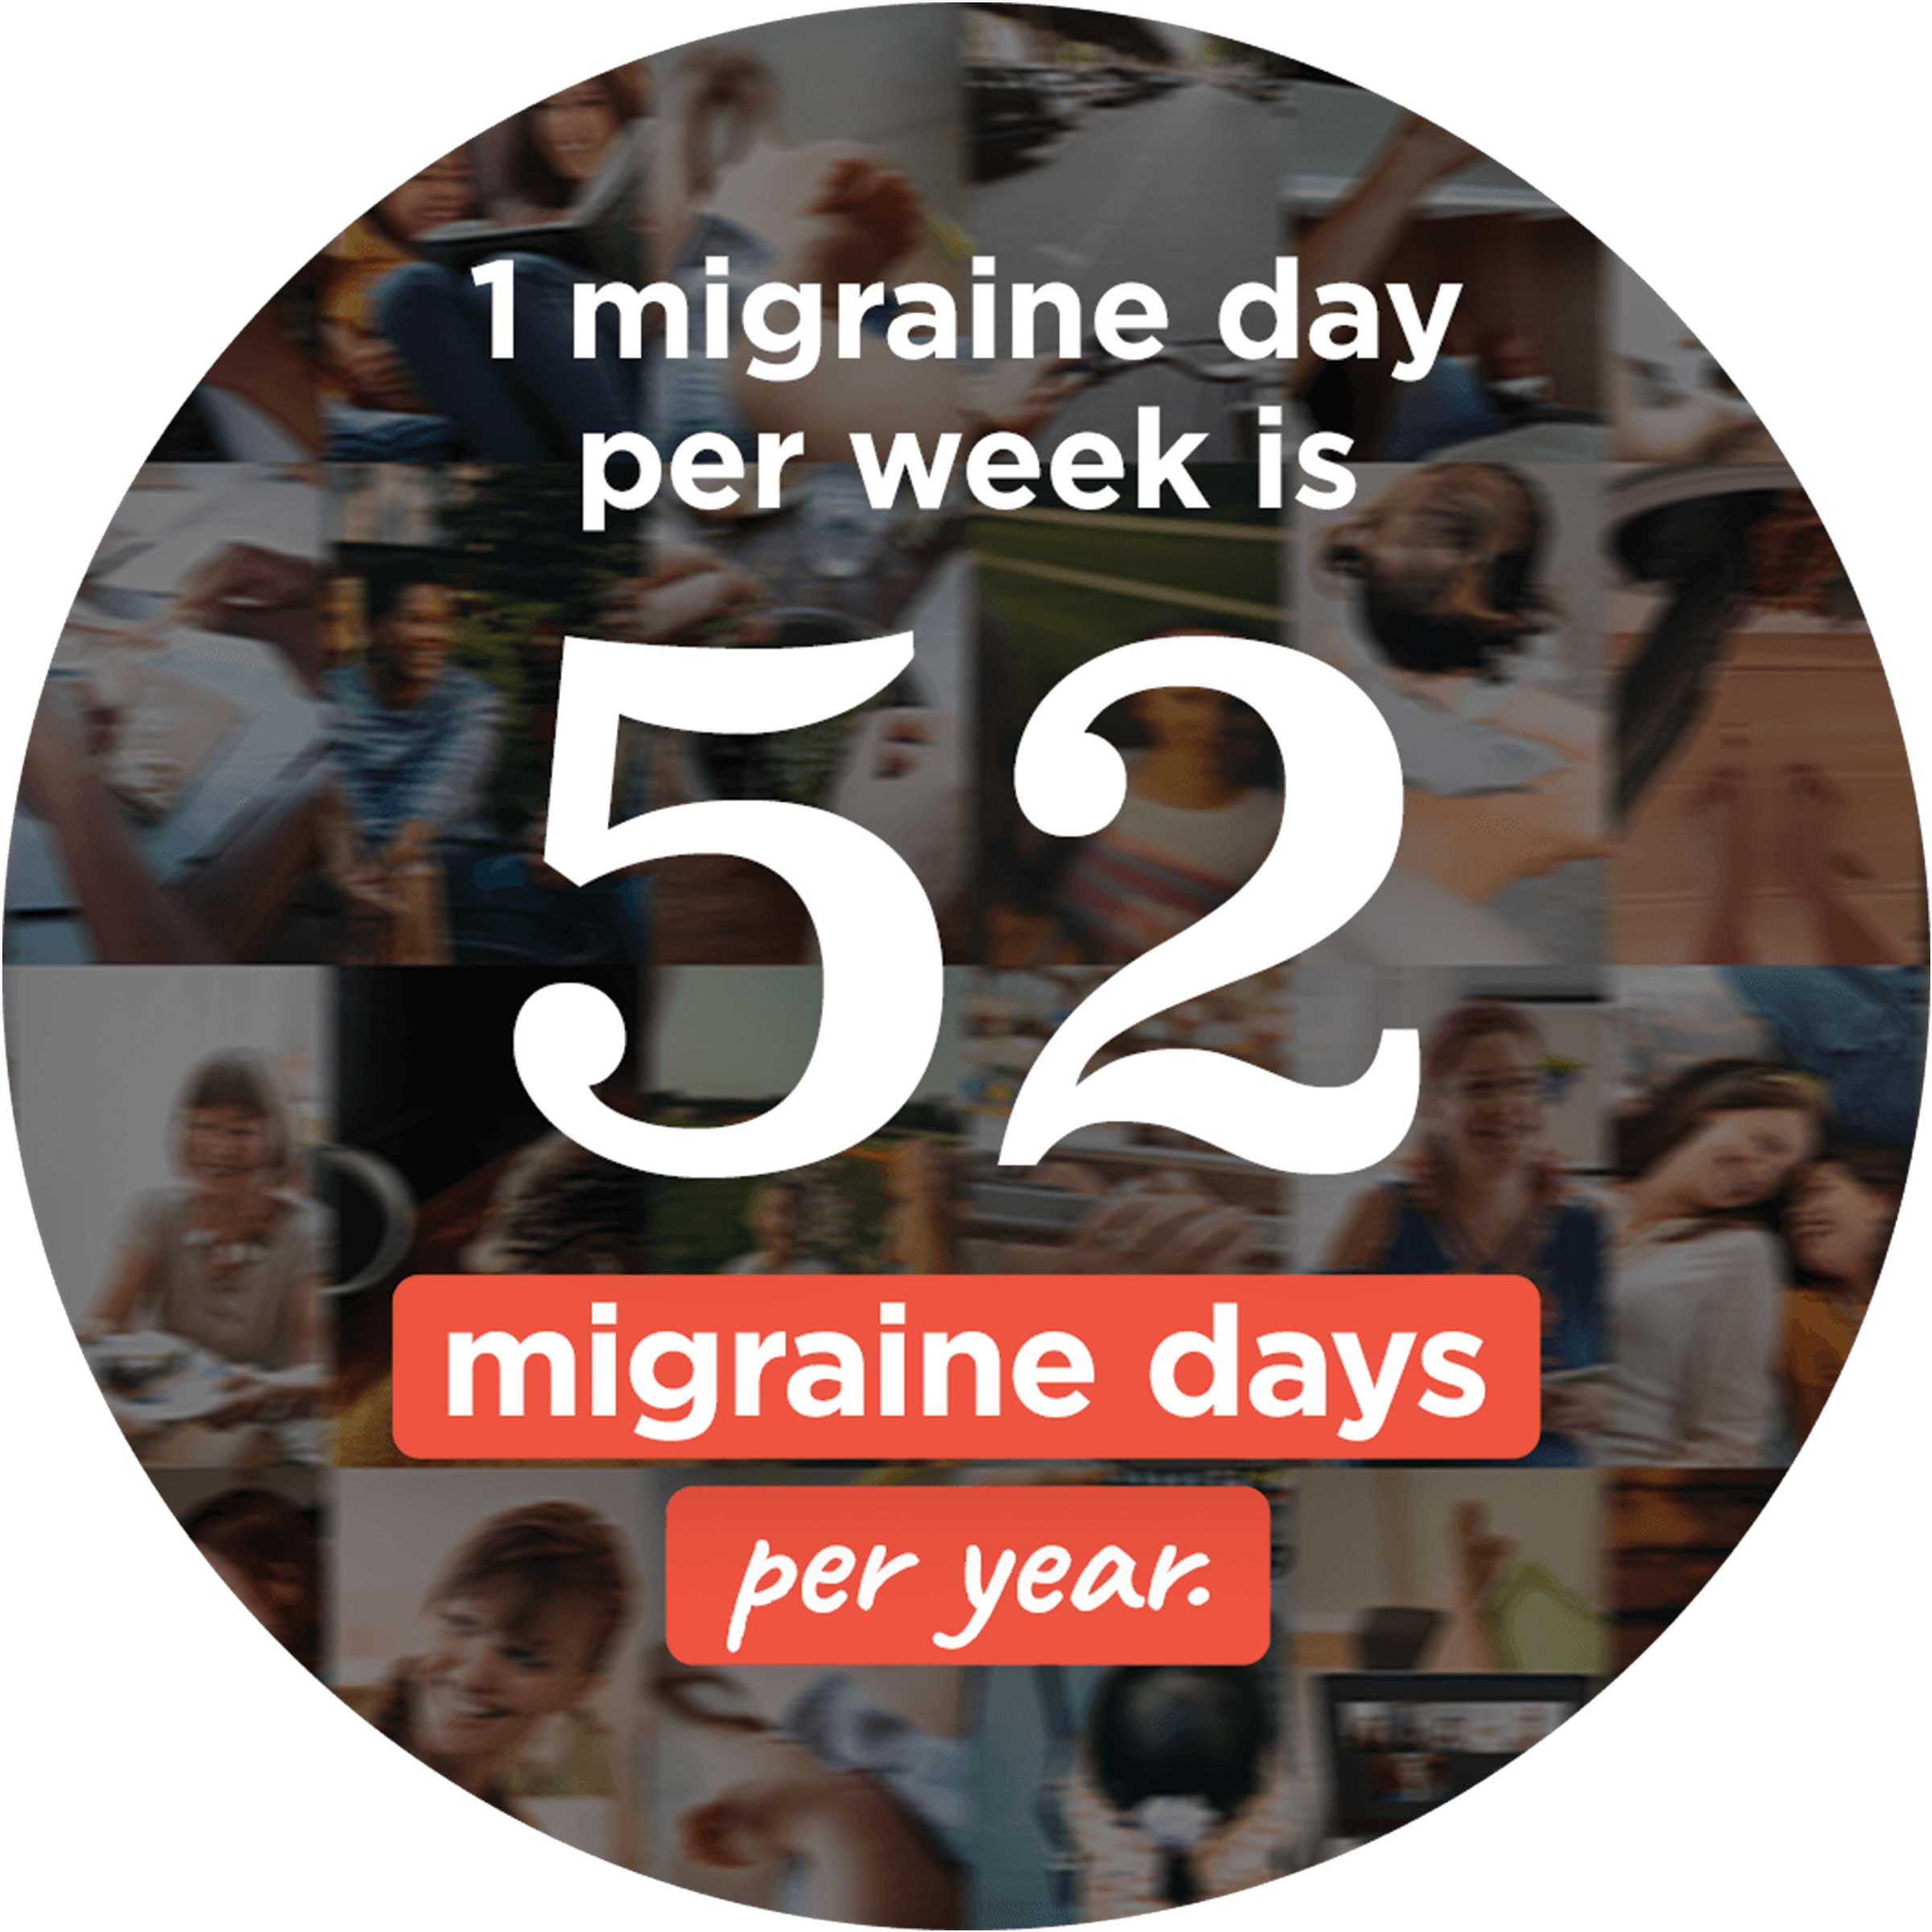 1 migraine day per week is 52 migraine days per year